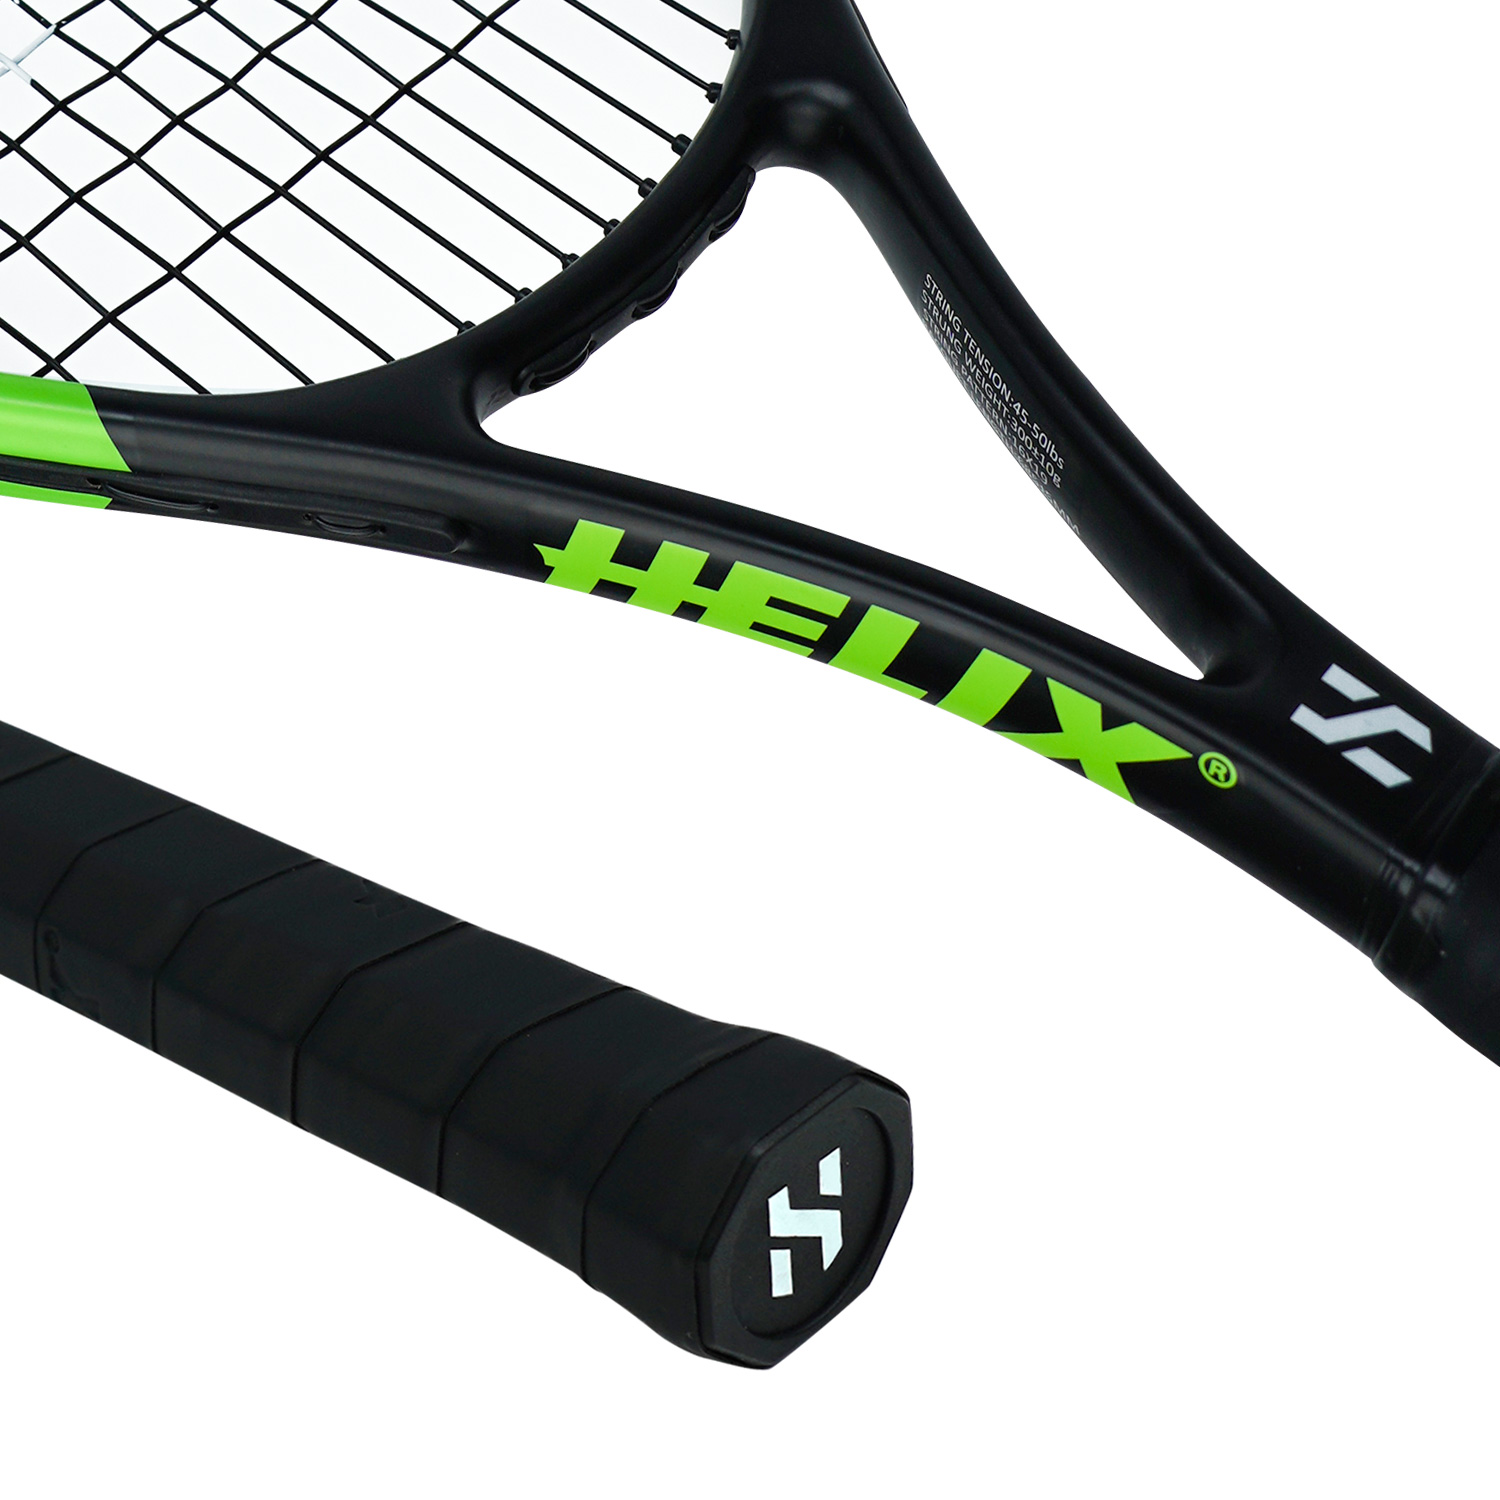 Helix Winner Tenis Raketi